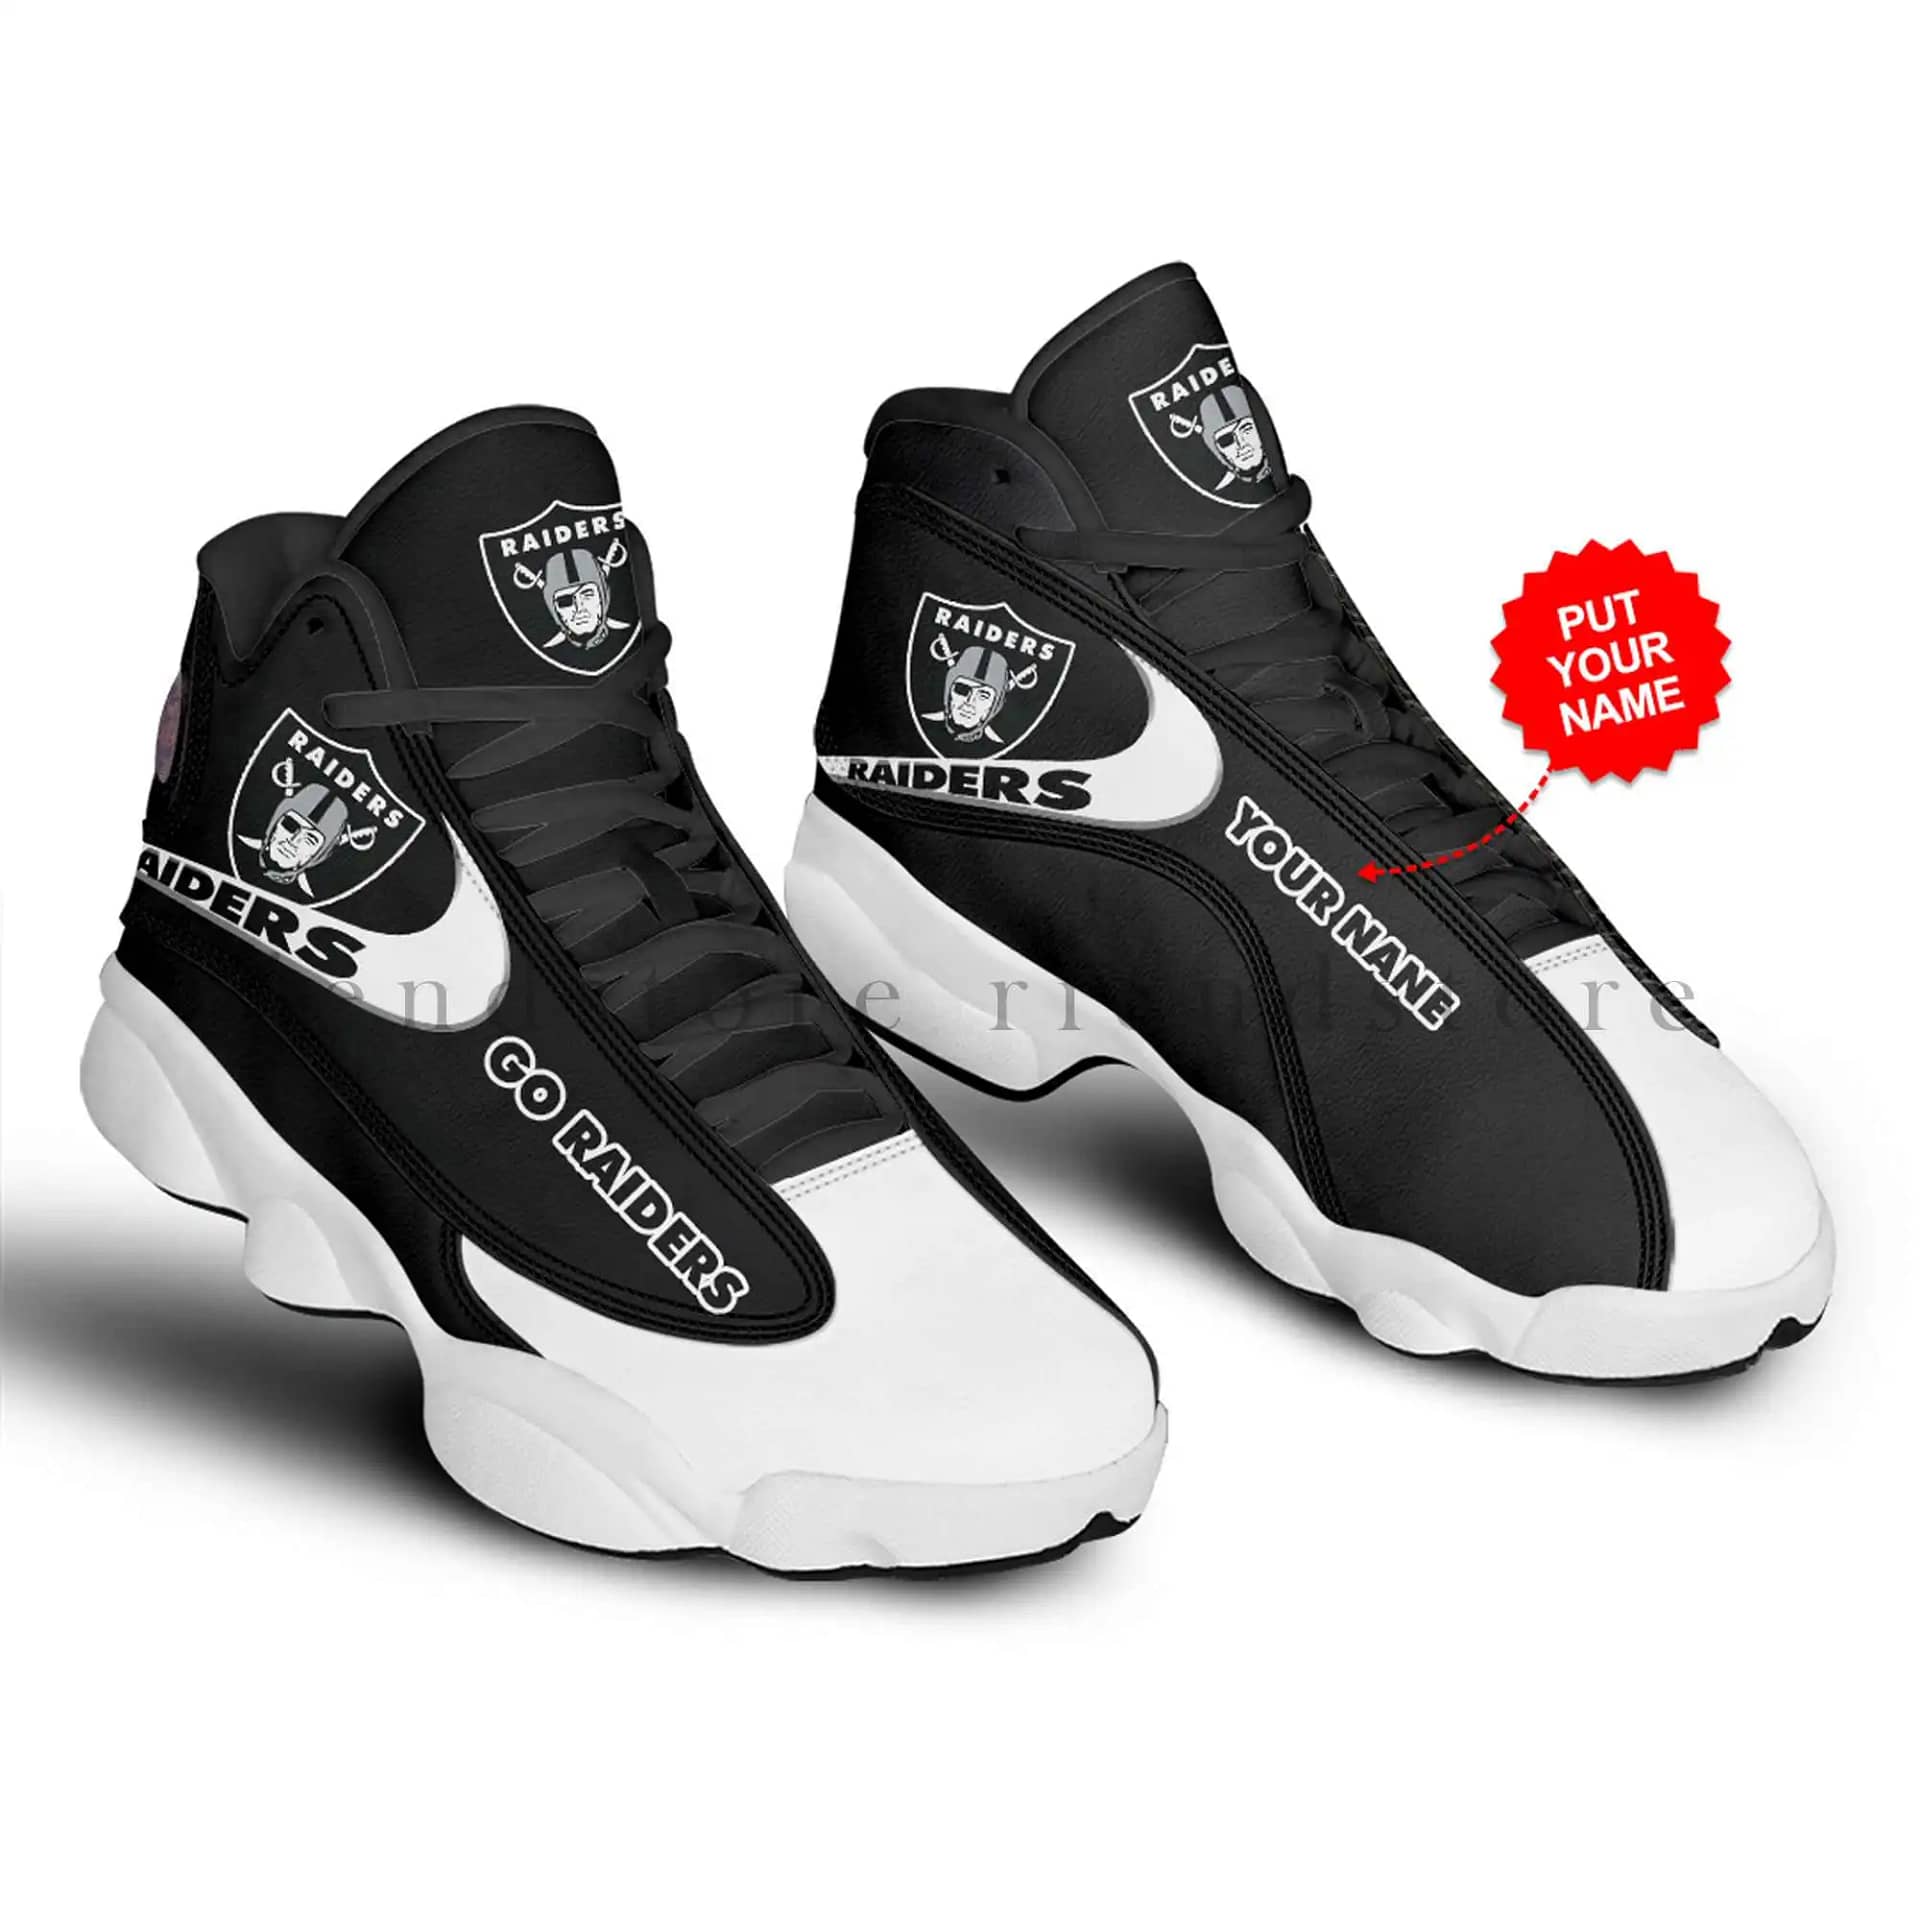 Personalized Las Vegas Raiders Air Jordan Shoes